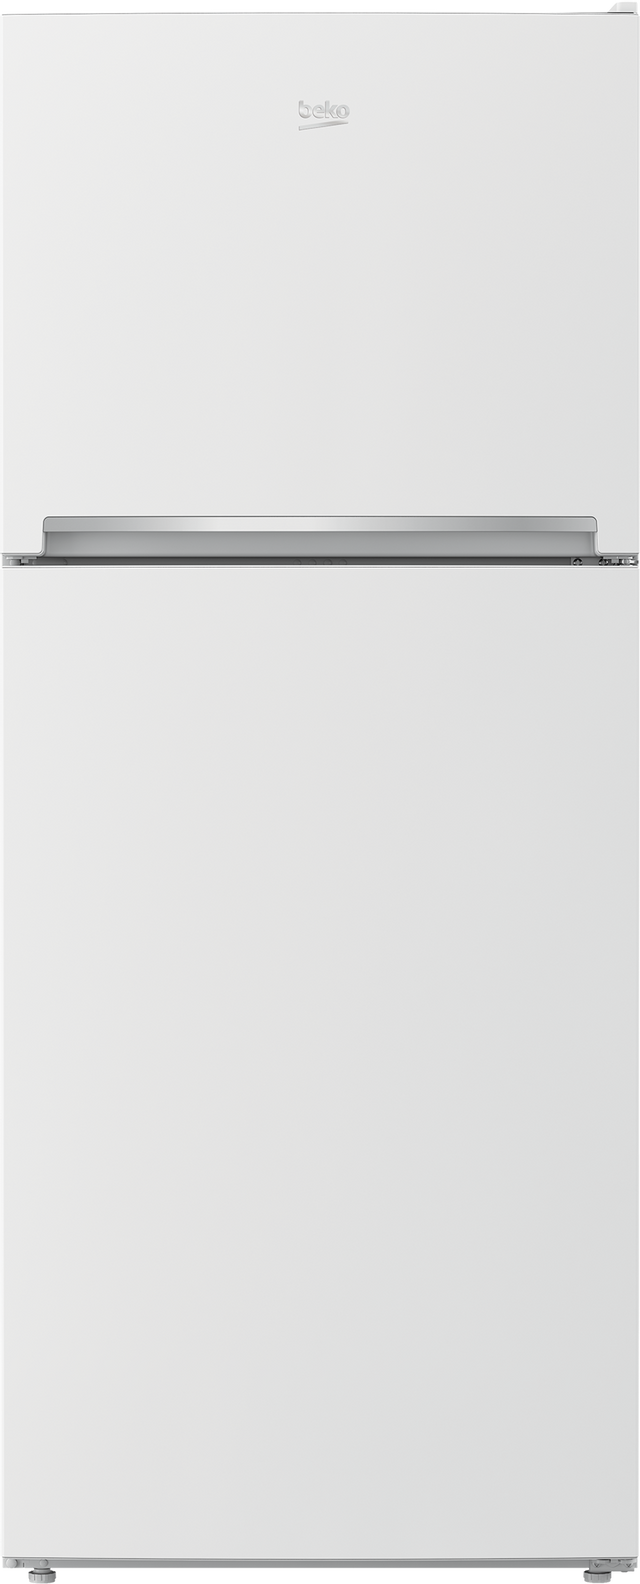 Beko 13.5 Cu. Ft. Stainless Steel Counter Depth Top Freezer Refrigerator 3